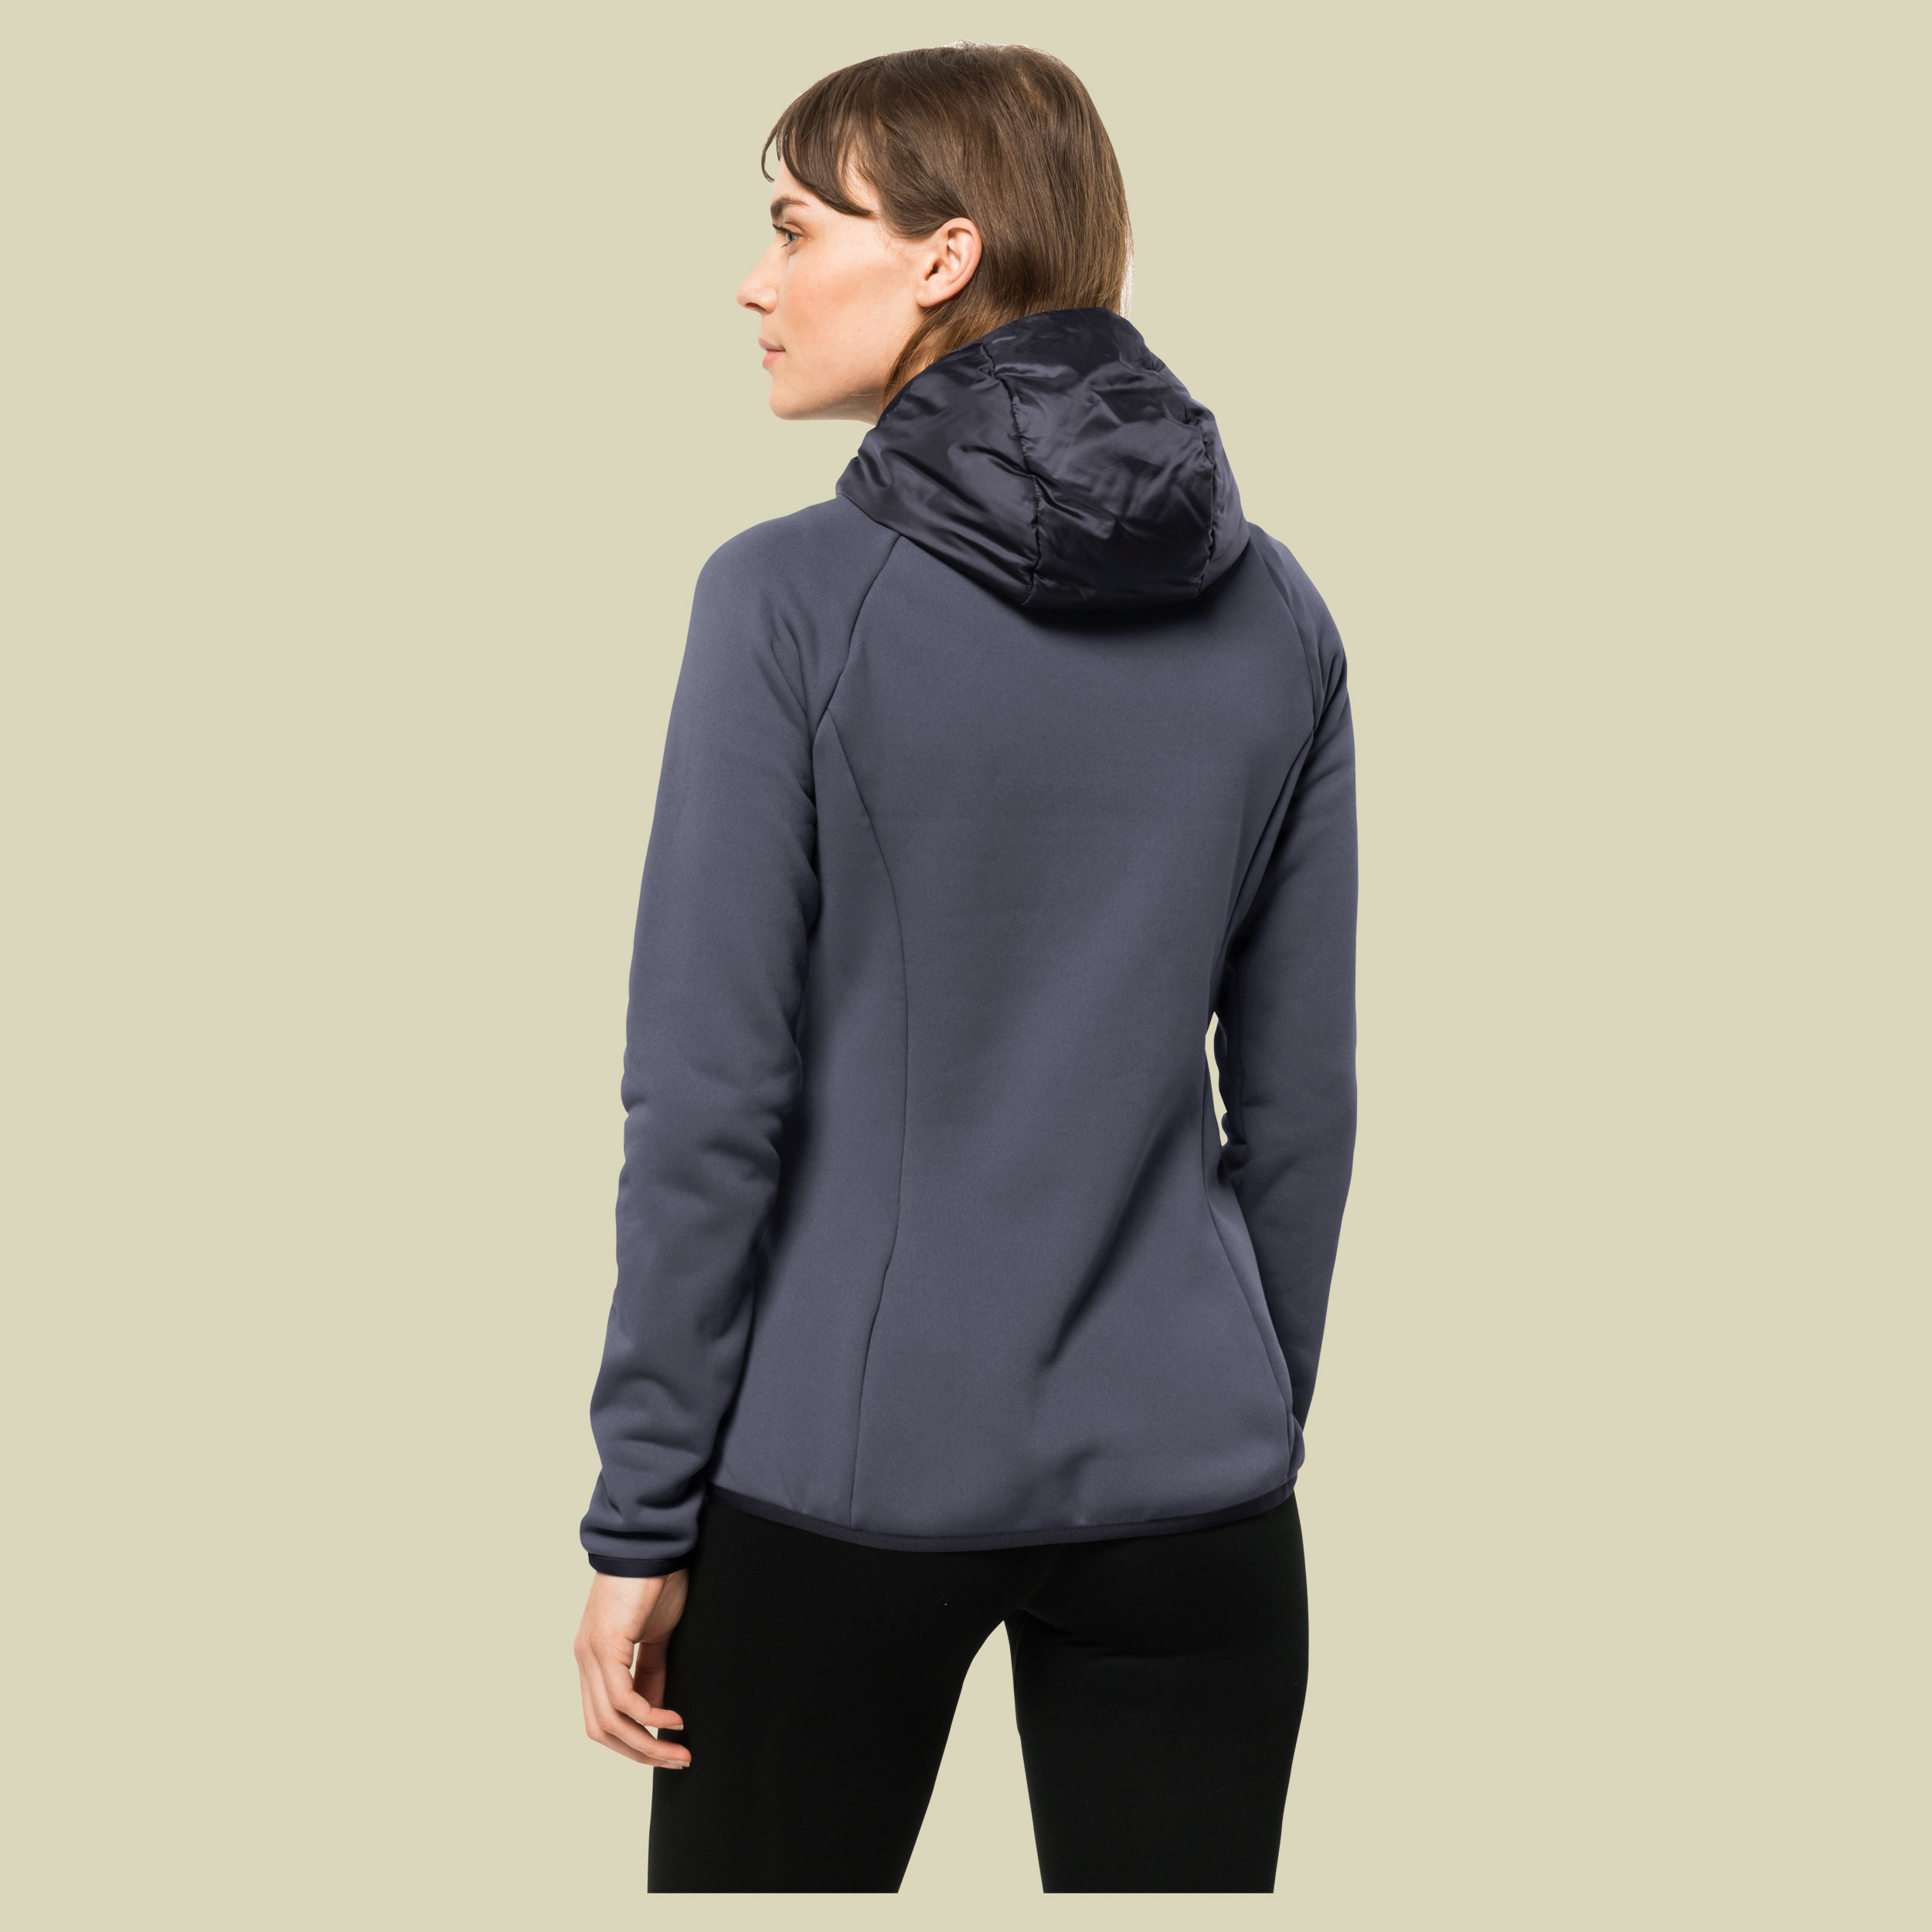 Routeburn Pro Hybrid Jacket Women Größe S Farbe graphite